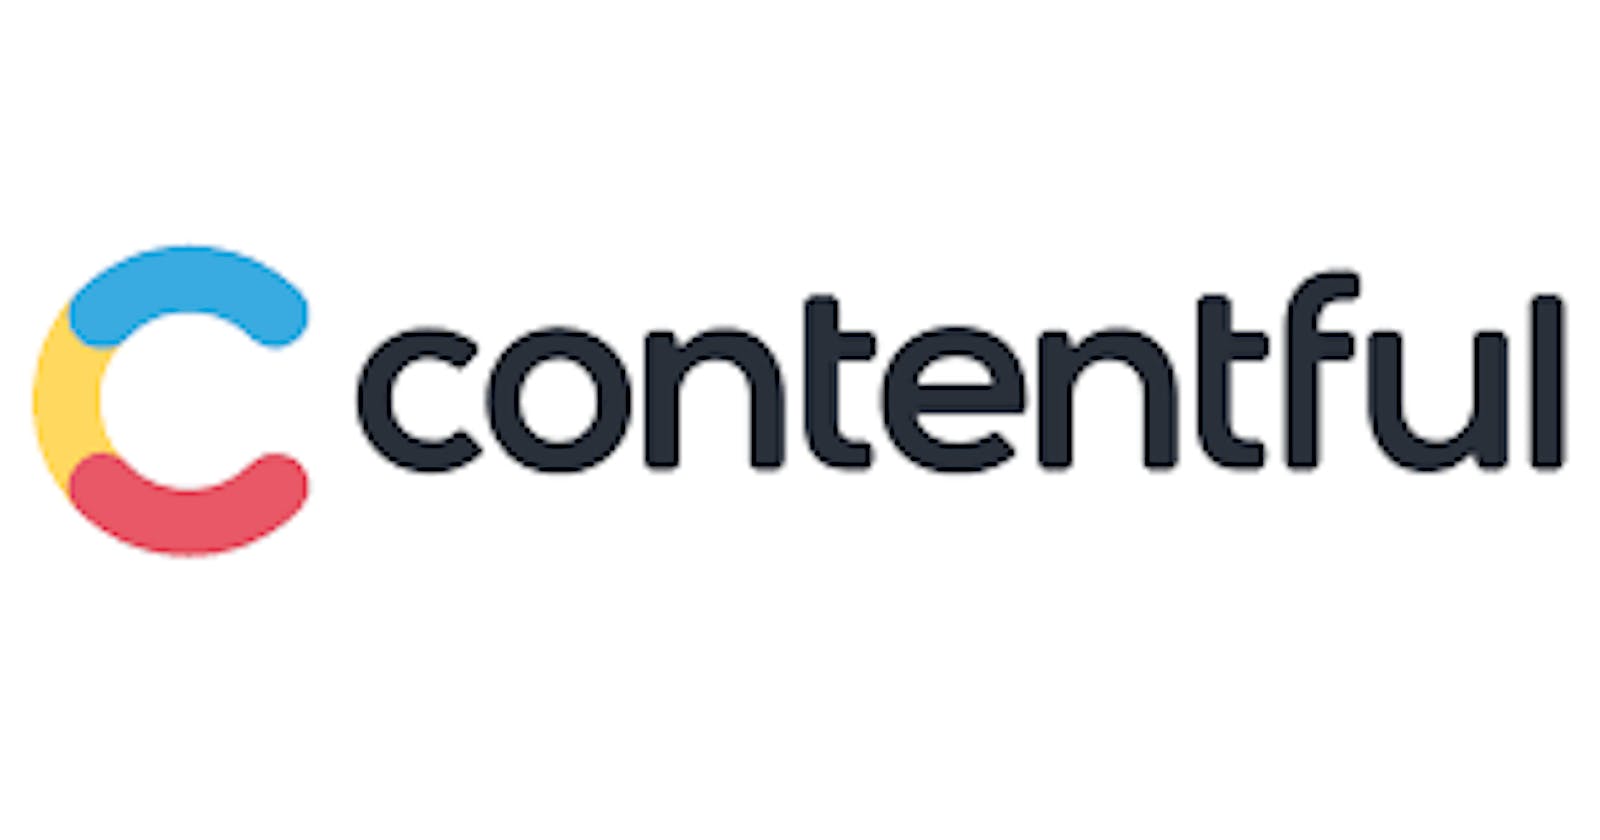 Synchronize contentful environments via Contentful CLI